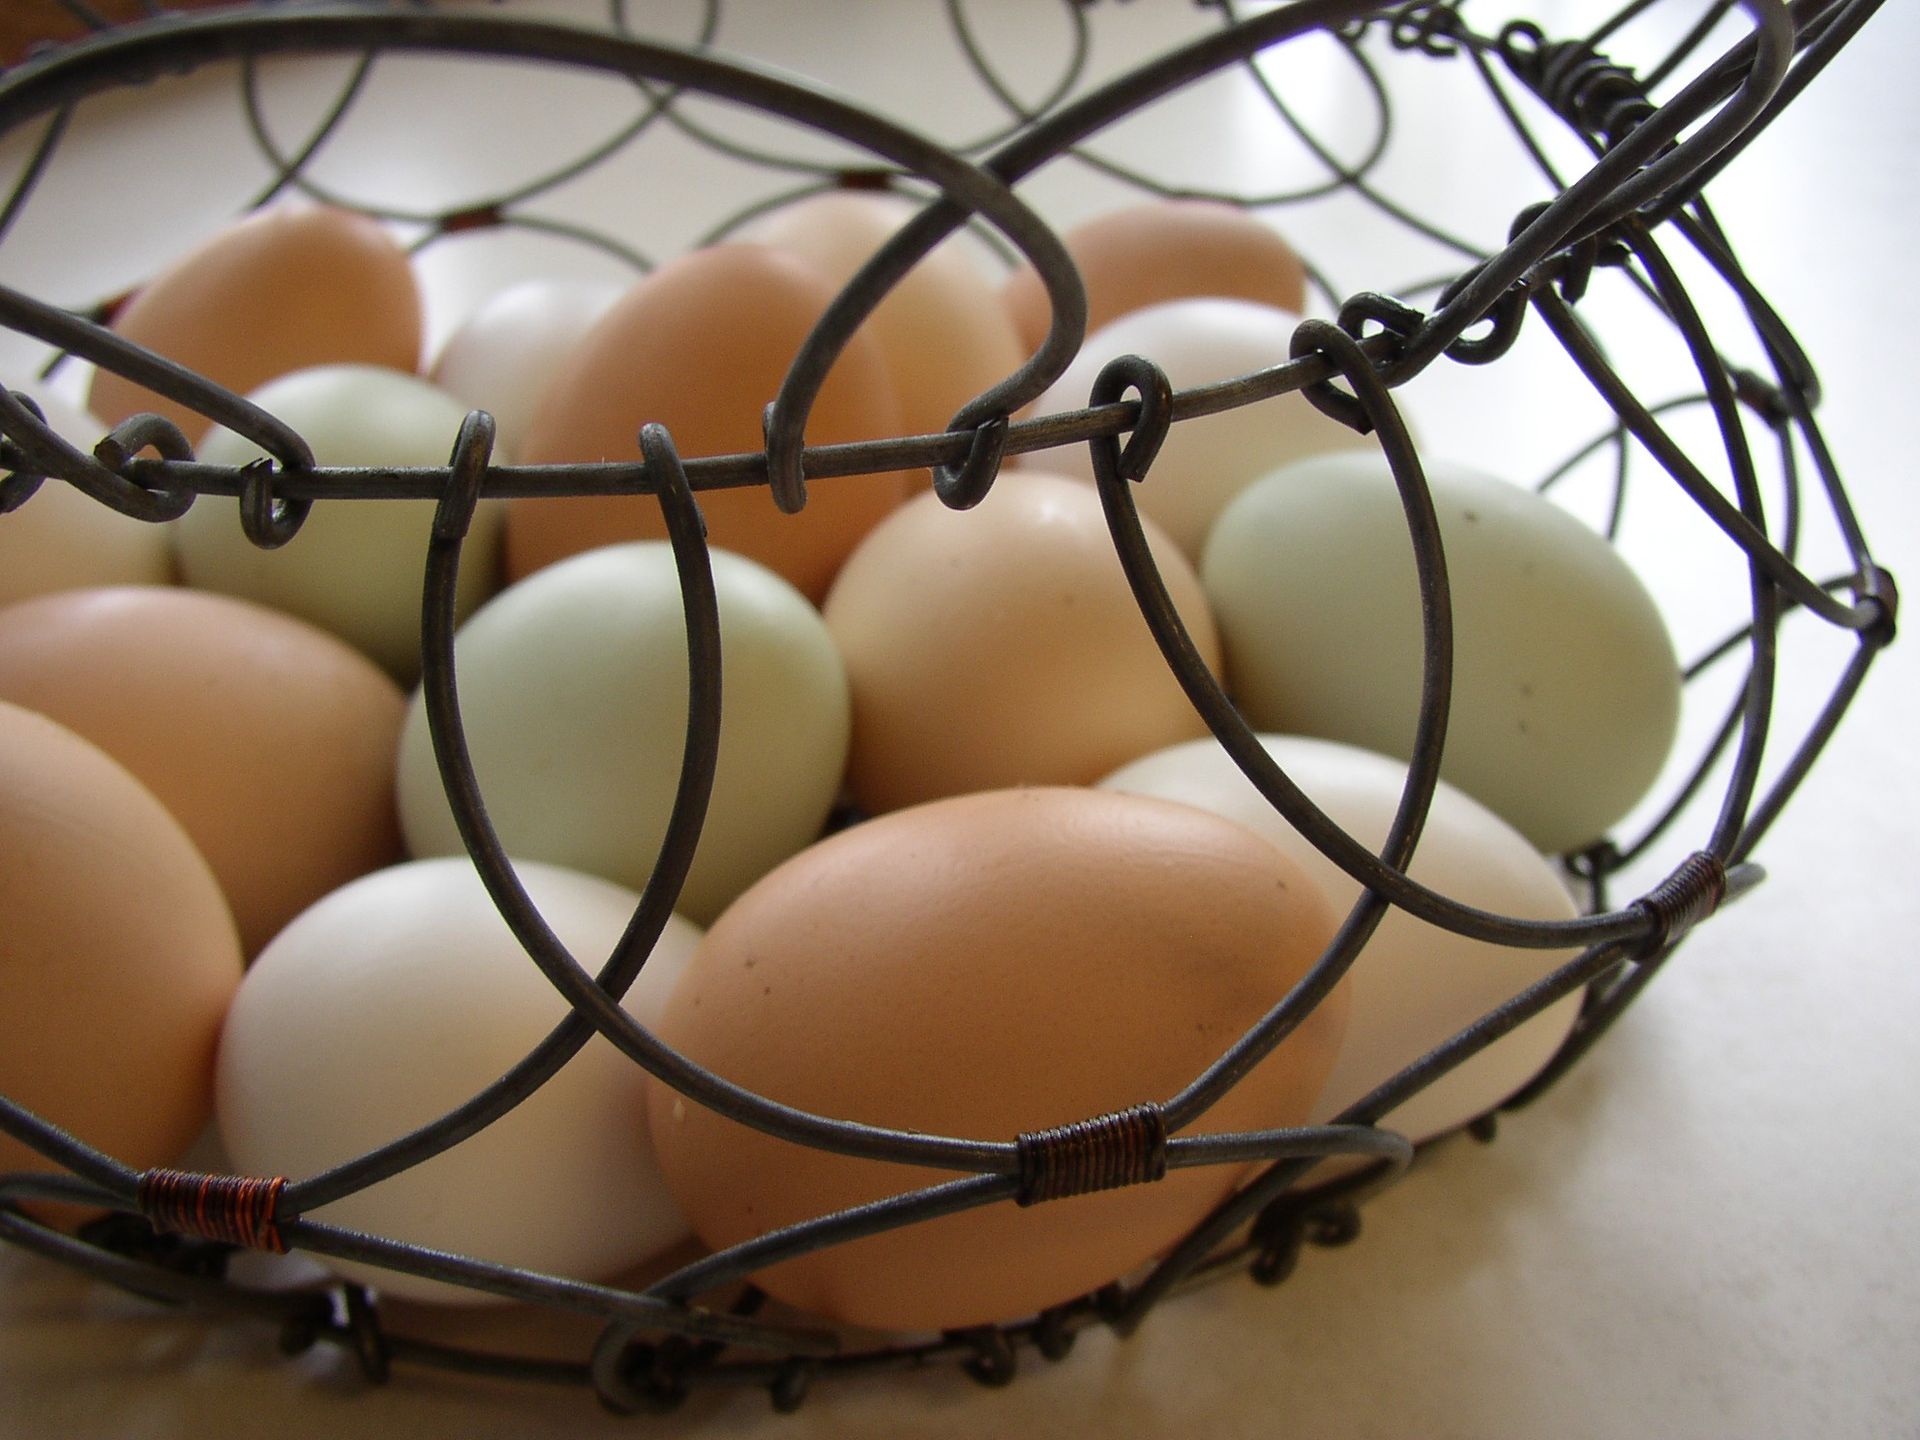 Eggs set in a basket.